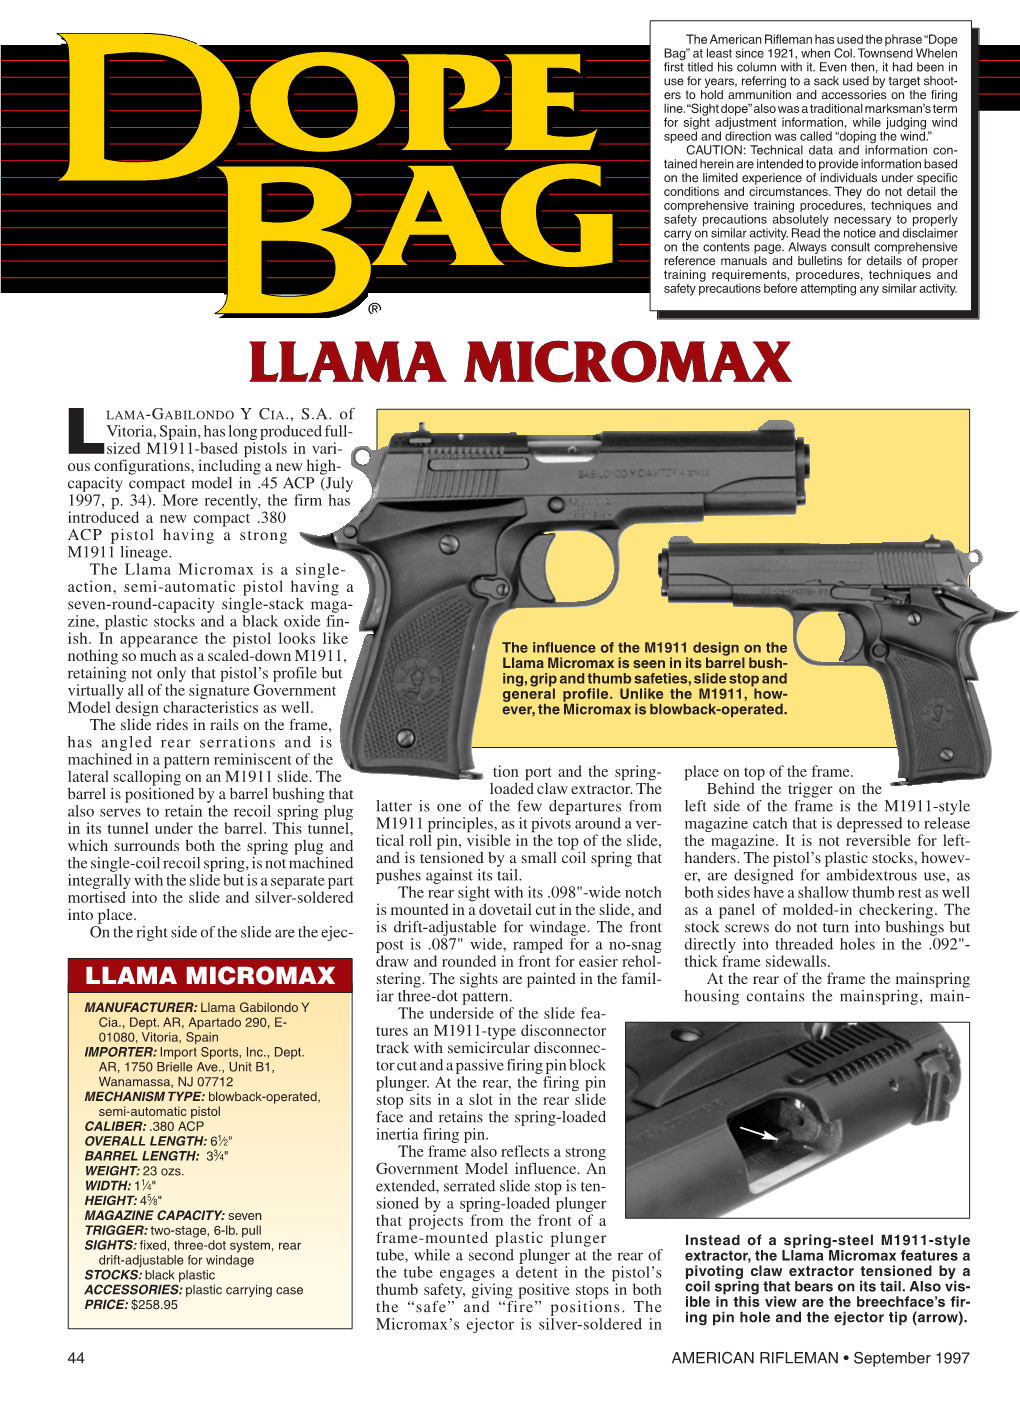 Llama Micromax / Winchester 1895 / IGA Coach Gun / Yardage Pro